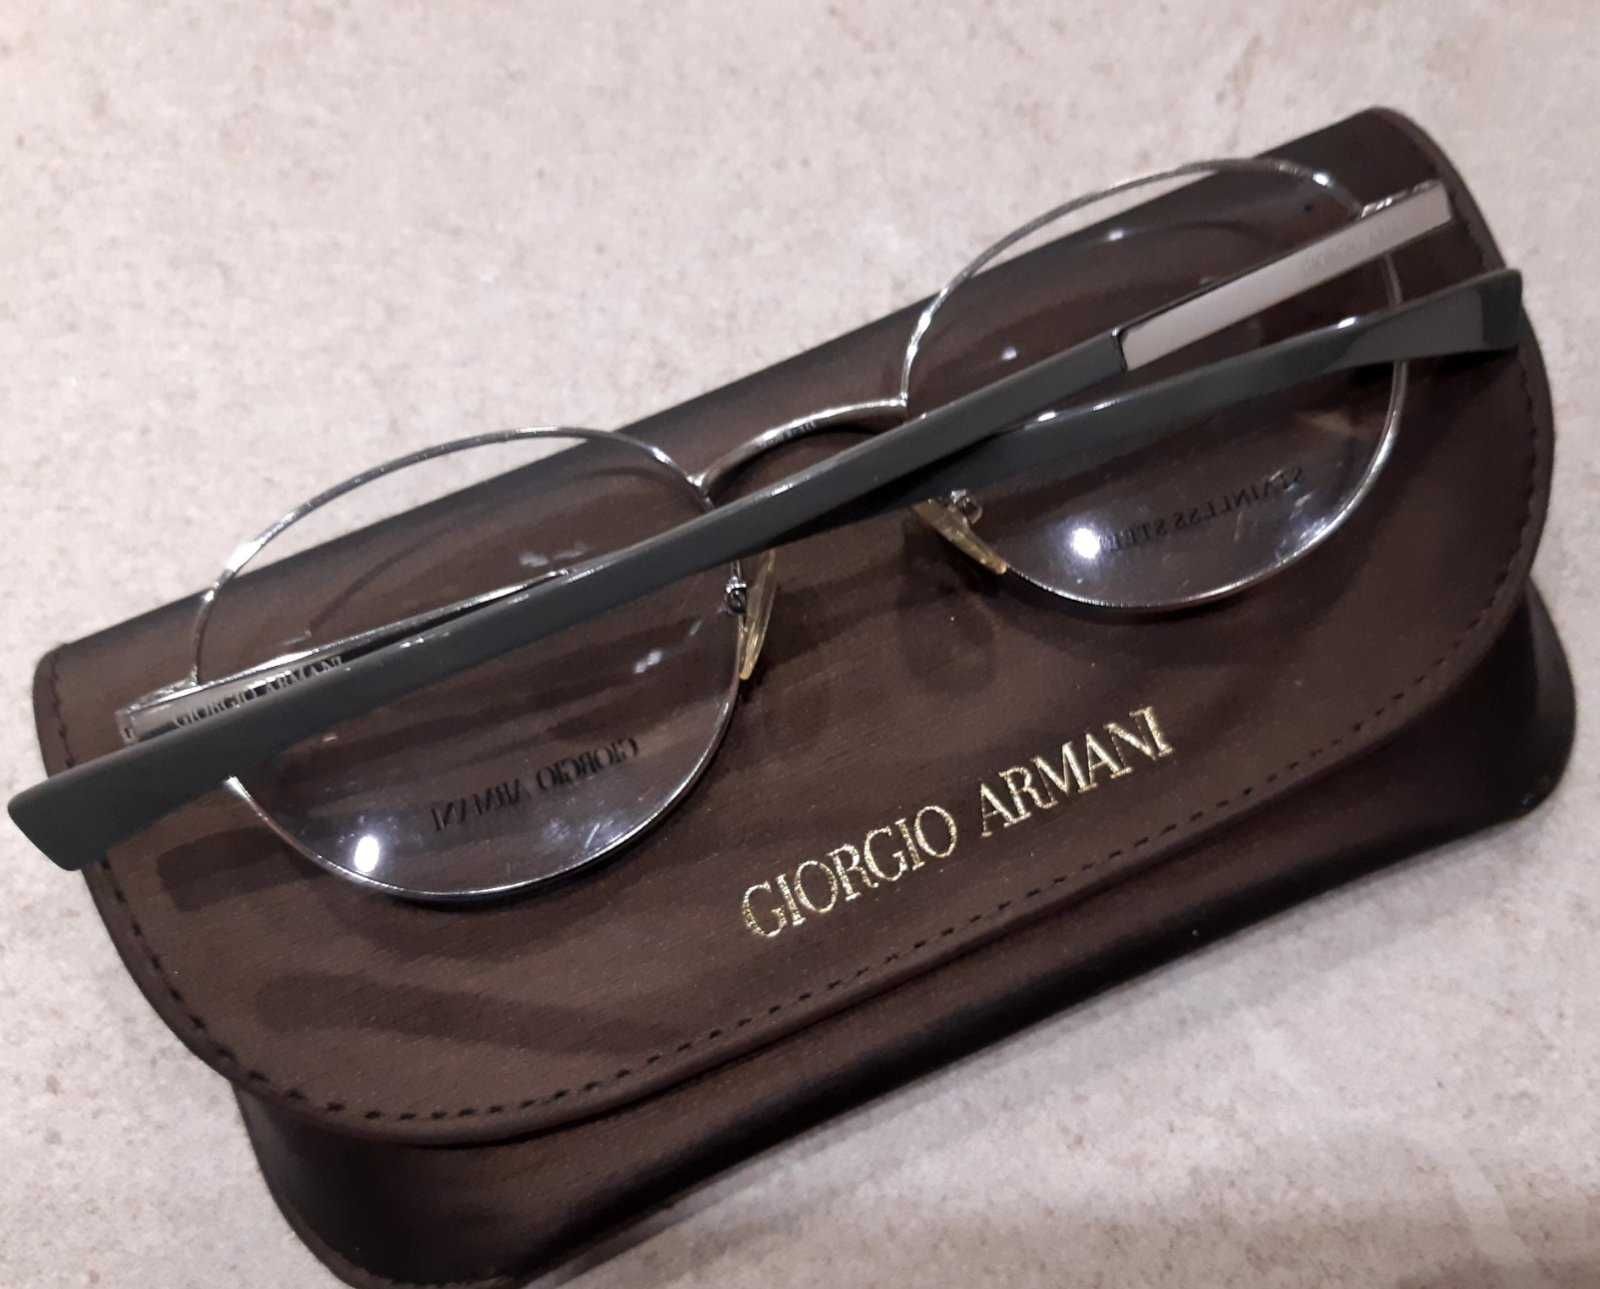 Metaliwe owalne okulary GA 625 010 od Georgio Armani!